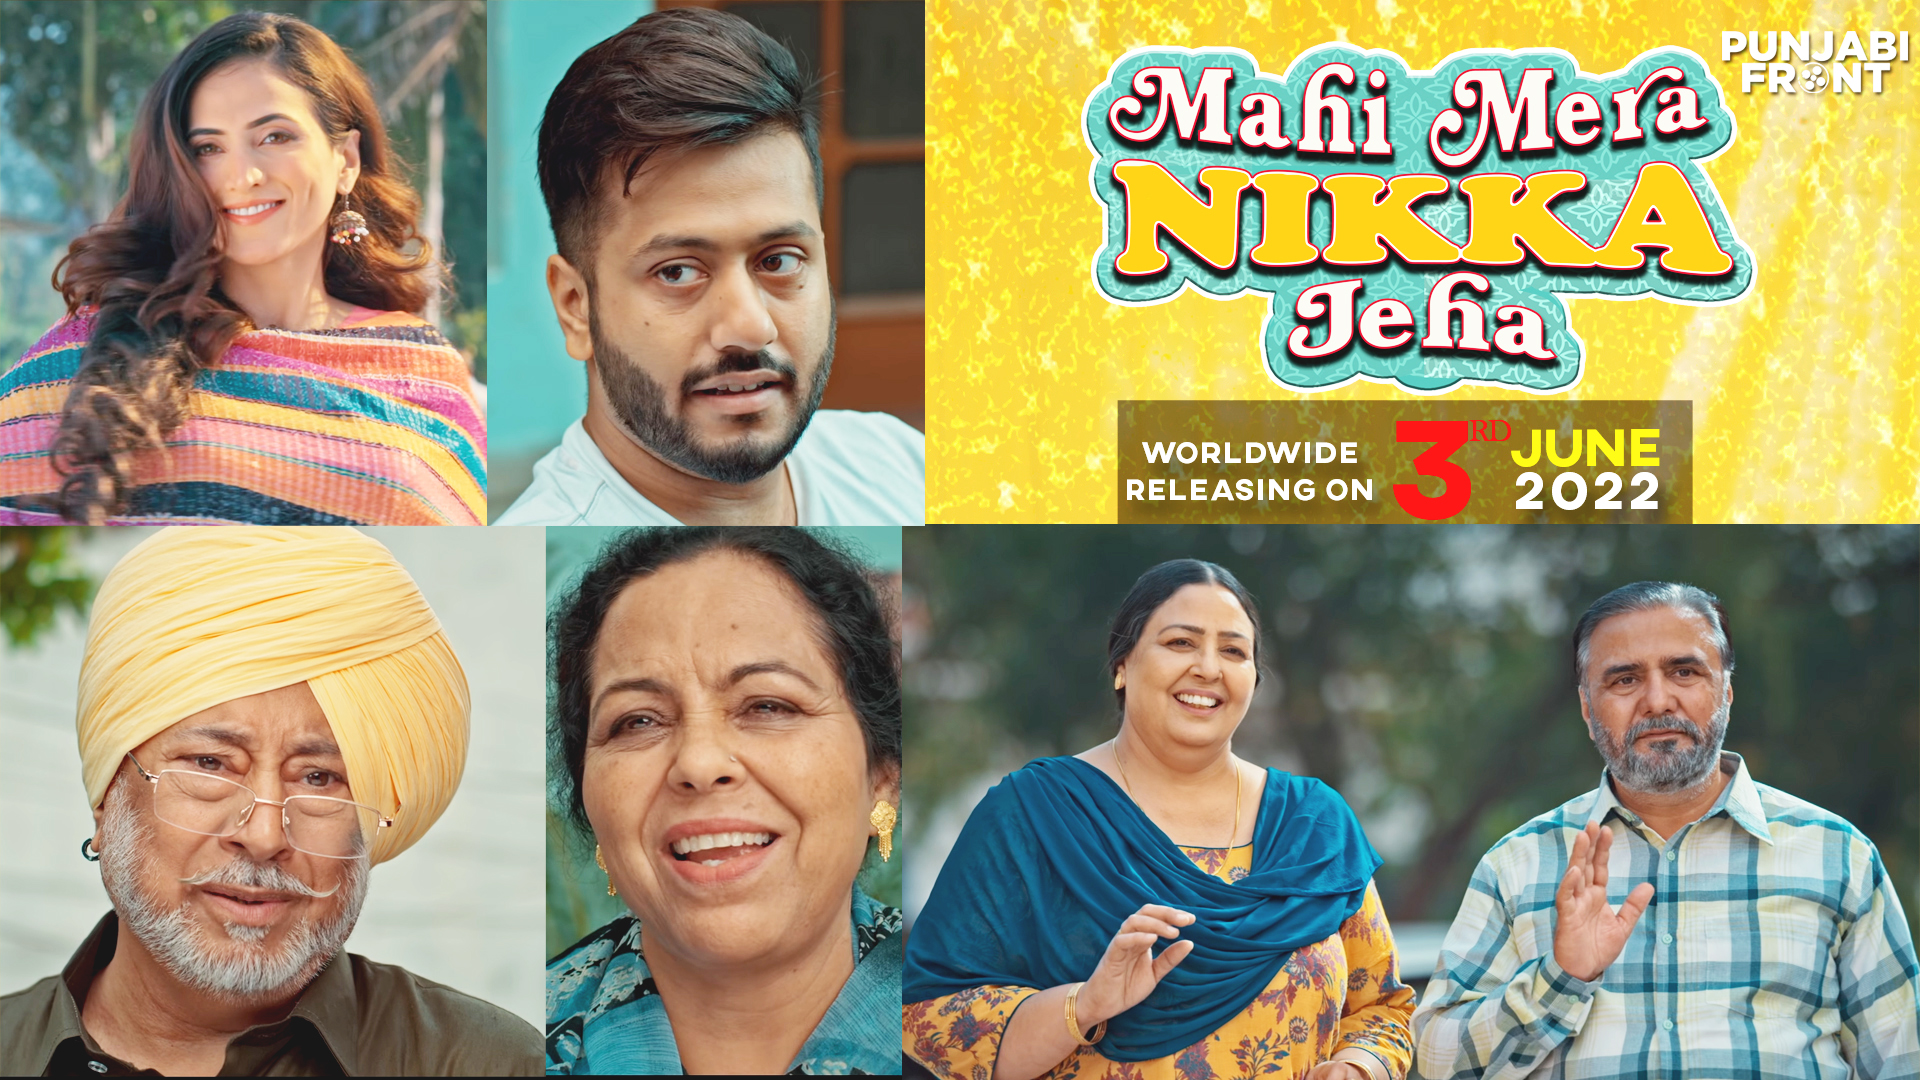 Mahi Mera Nikka Jeha Trailer